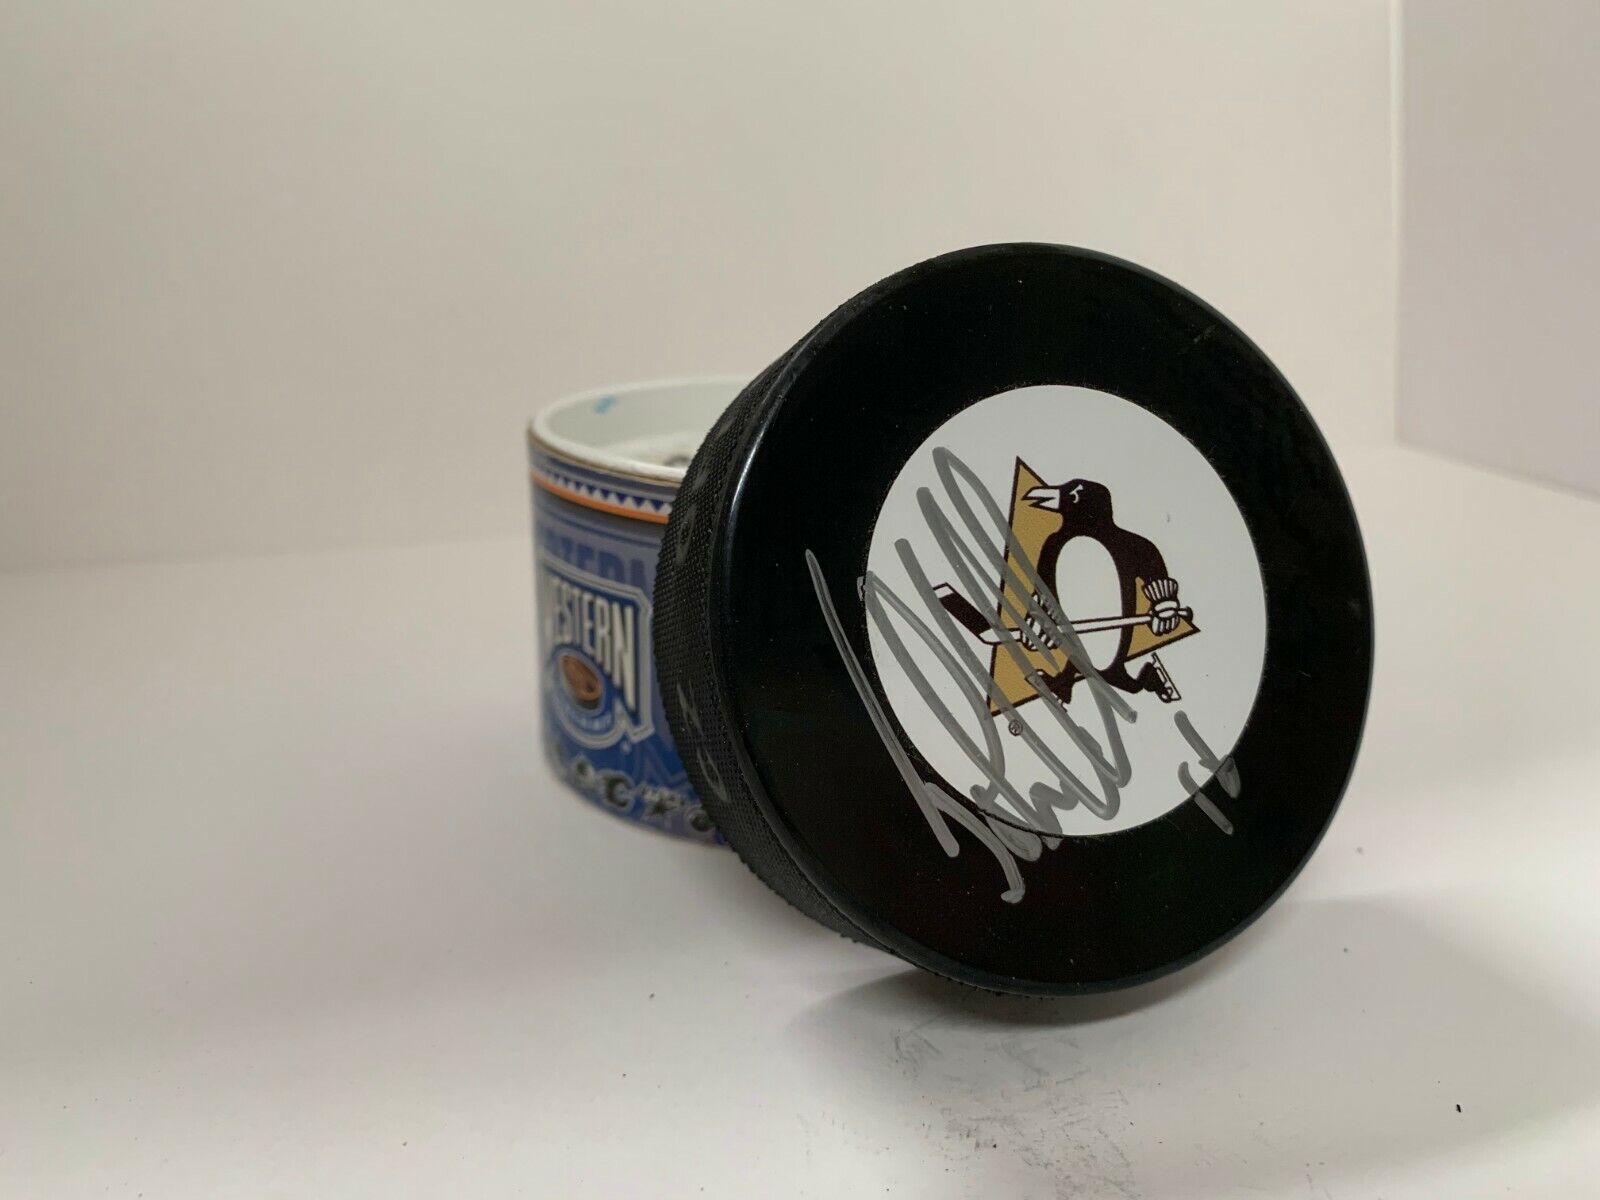 John LeClair Autographed Signed Pittsburgh Penguins Hockey Puck W/ ASCF COA